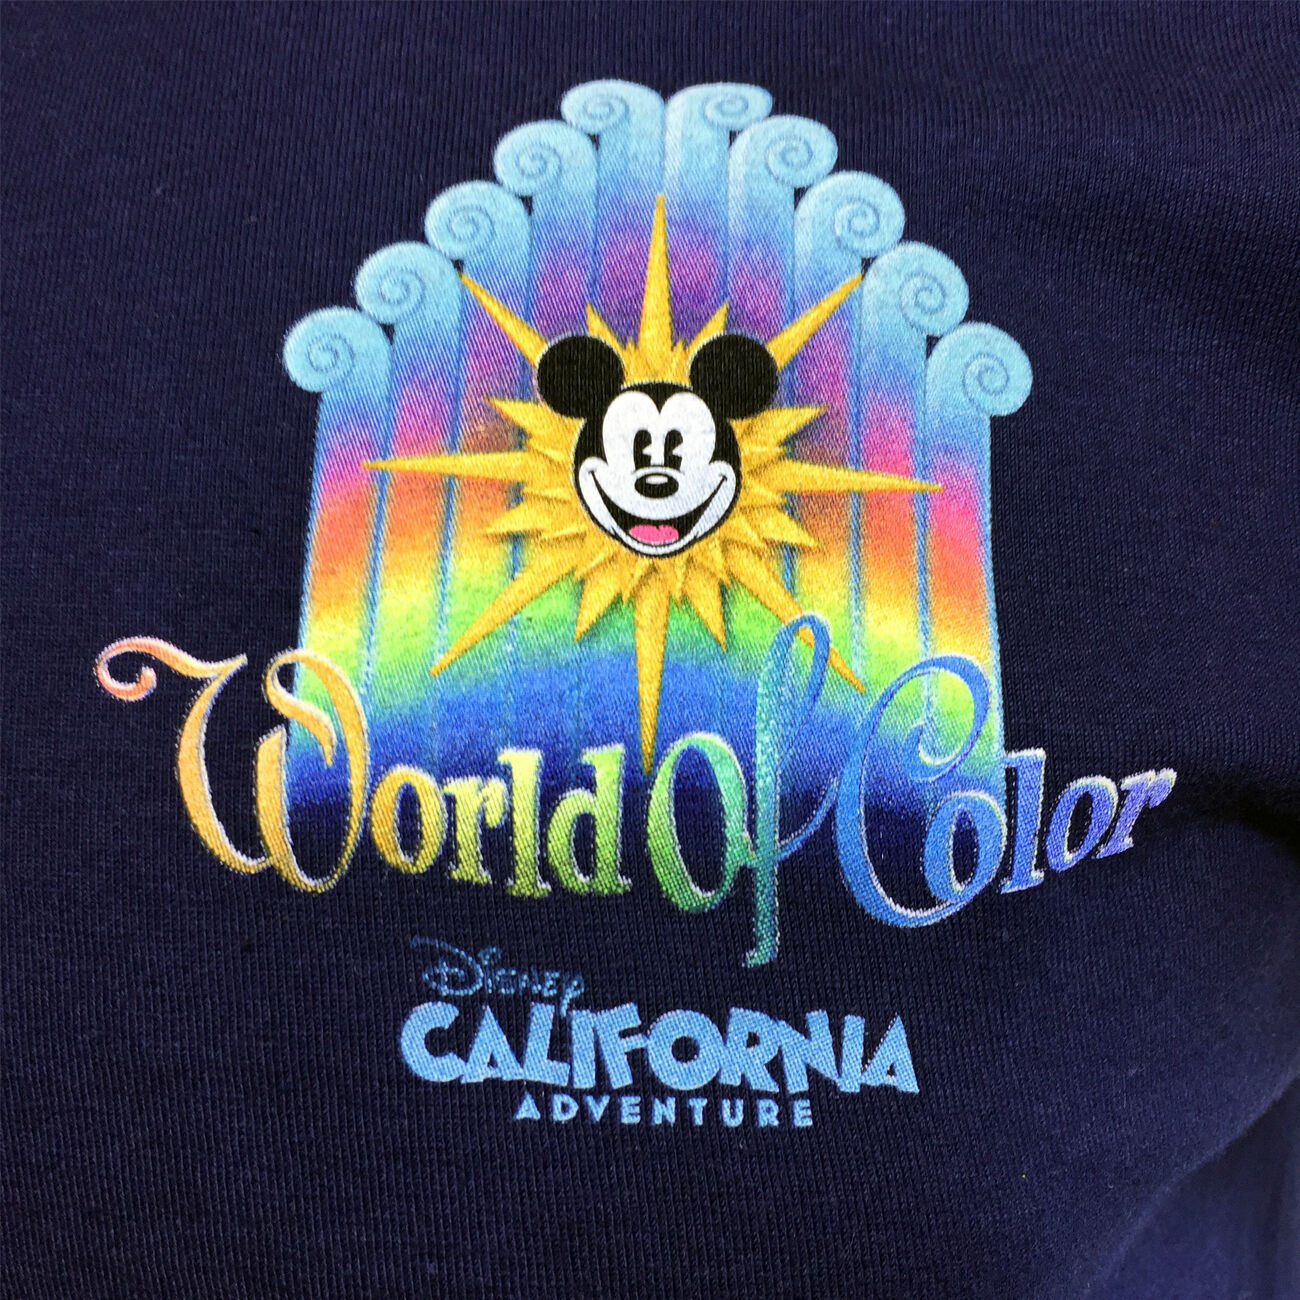 Disney World of Color T-Shirt - Navy Blue Mens/Unisex